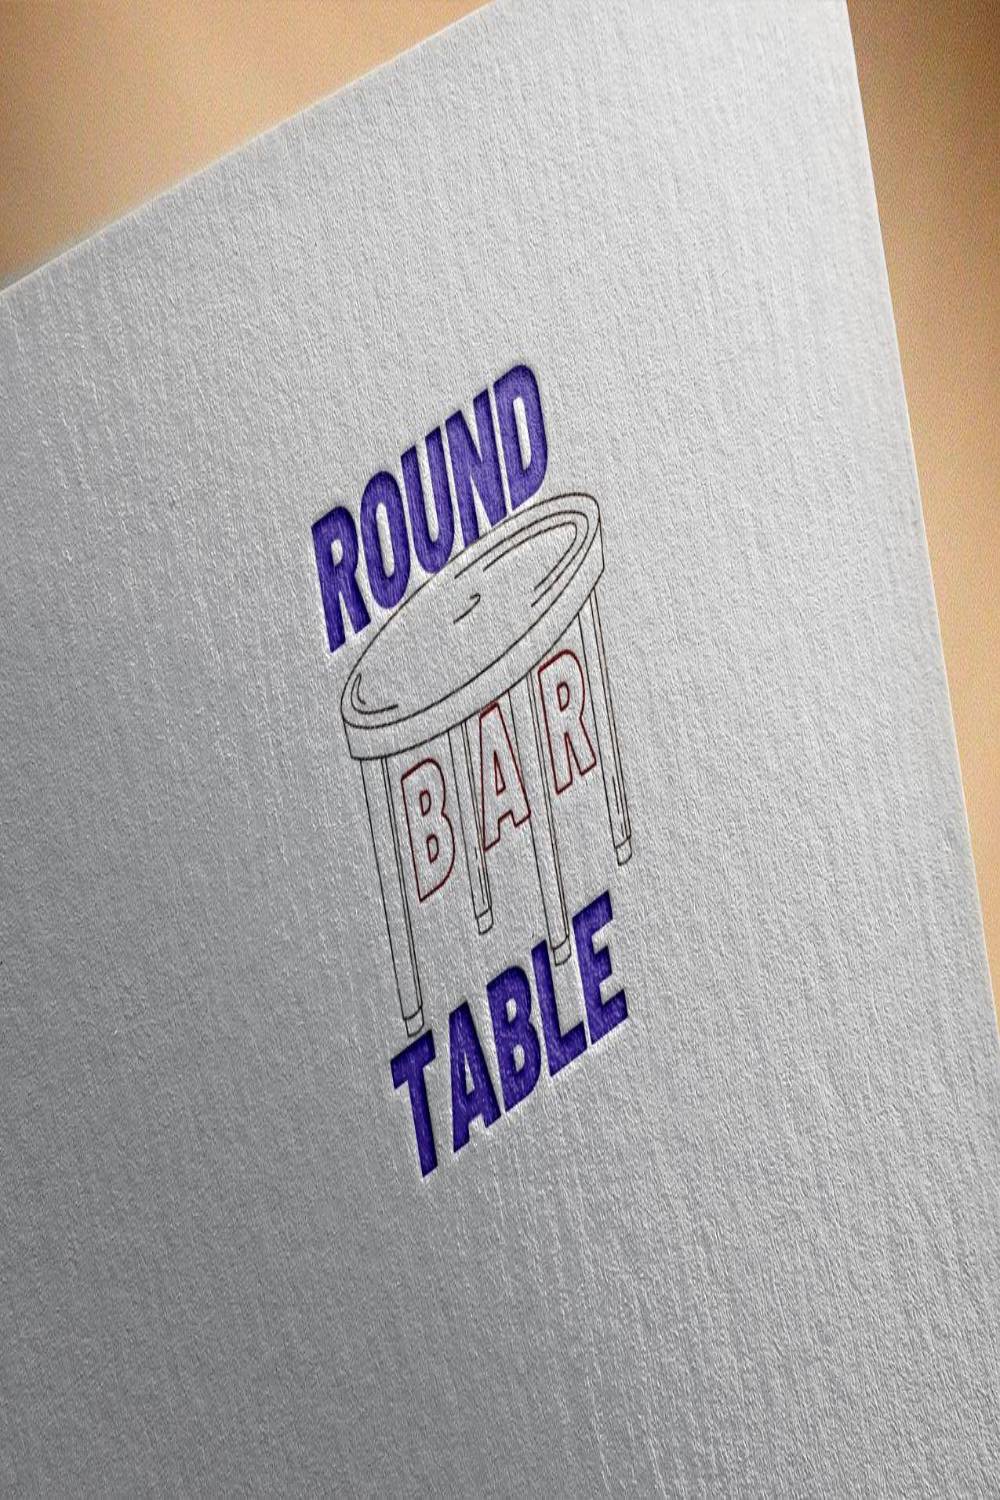 Round Table Bar Logo Design pinterest image.